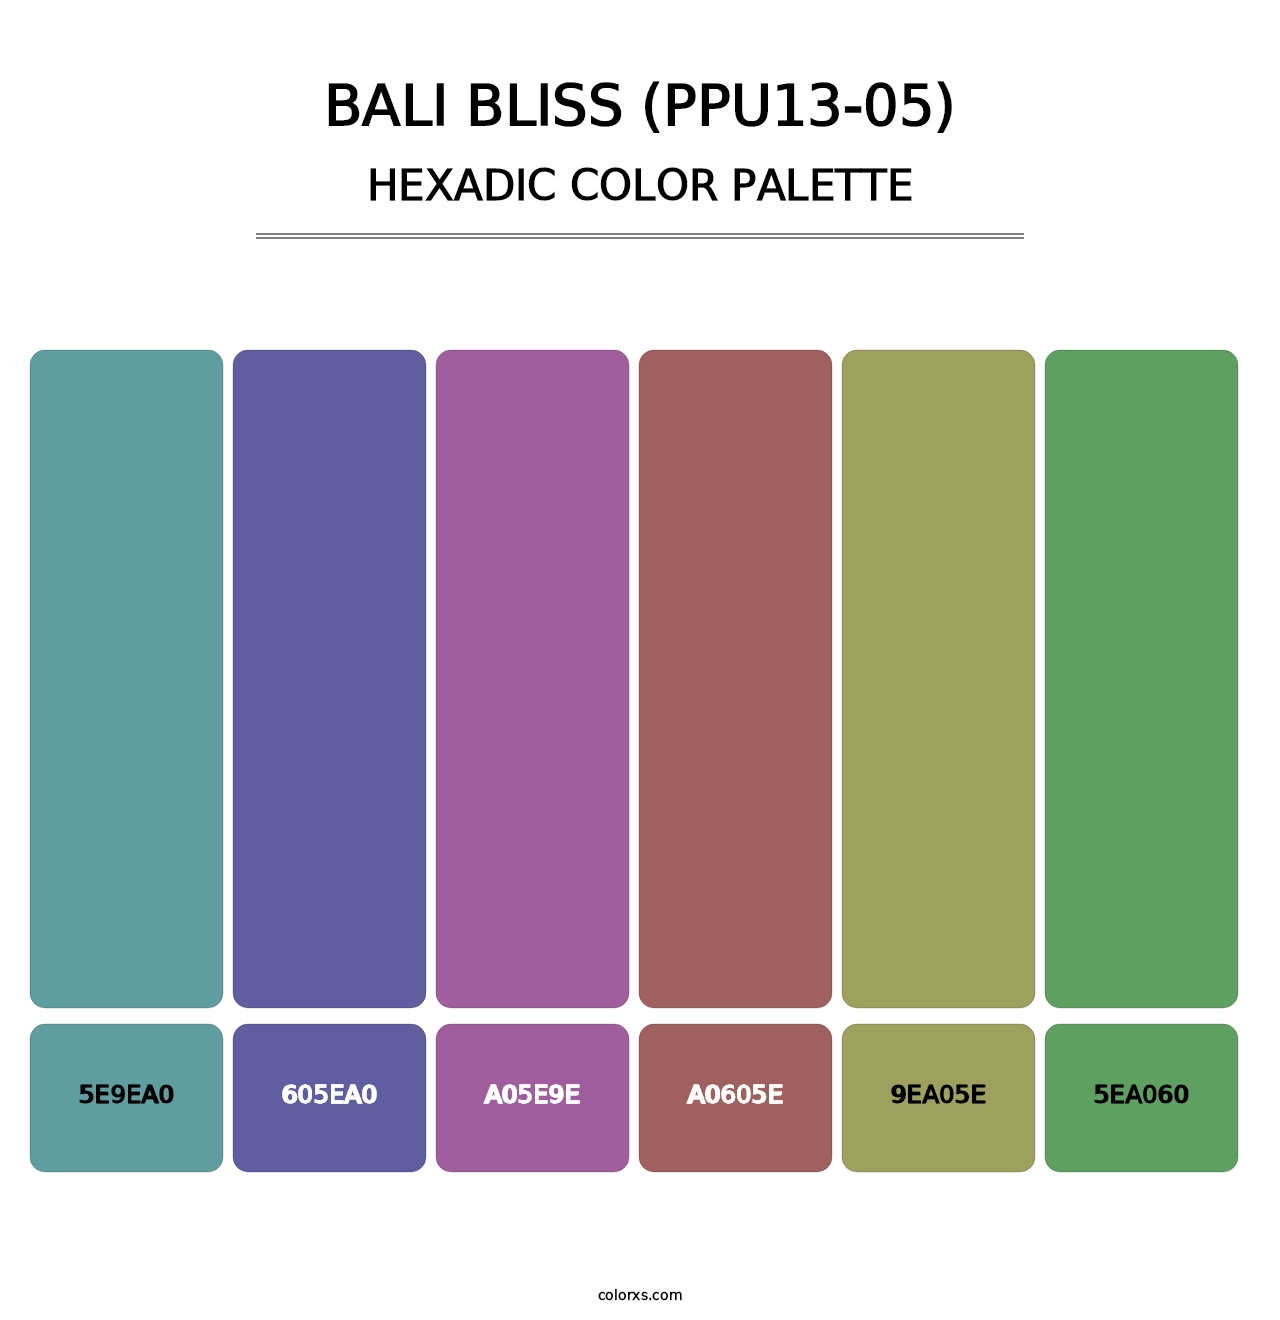 Bali Bliss (PPU13-05) - Hexadic Color Palette